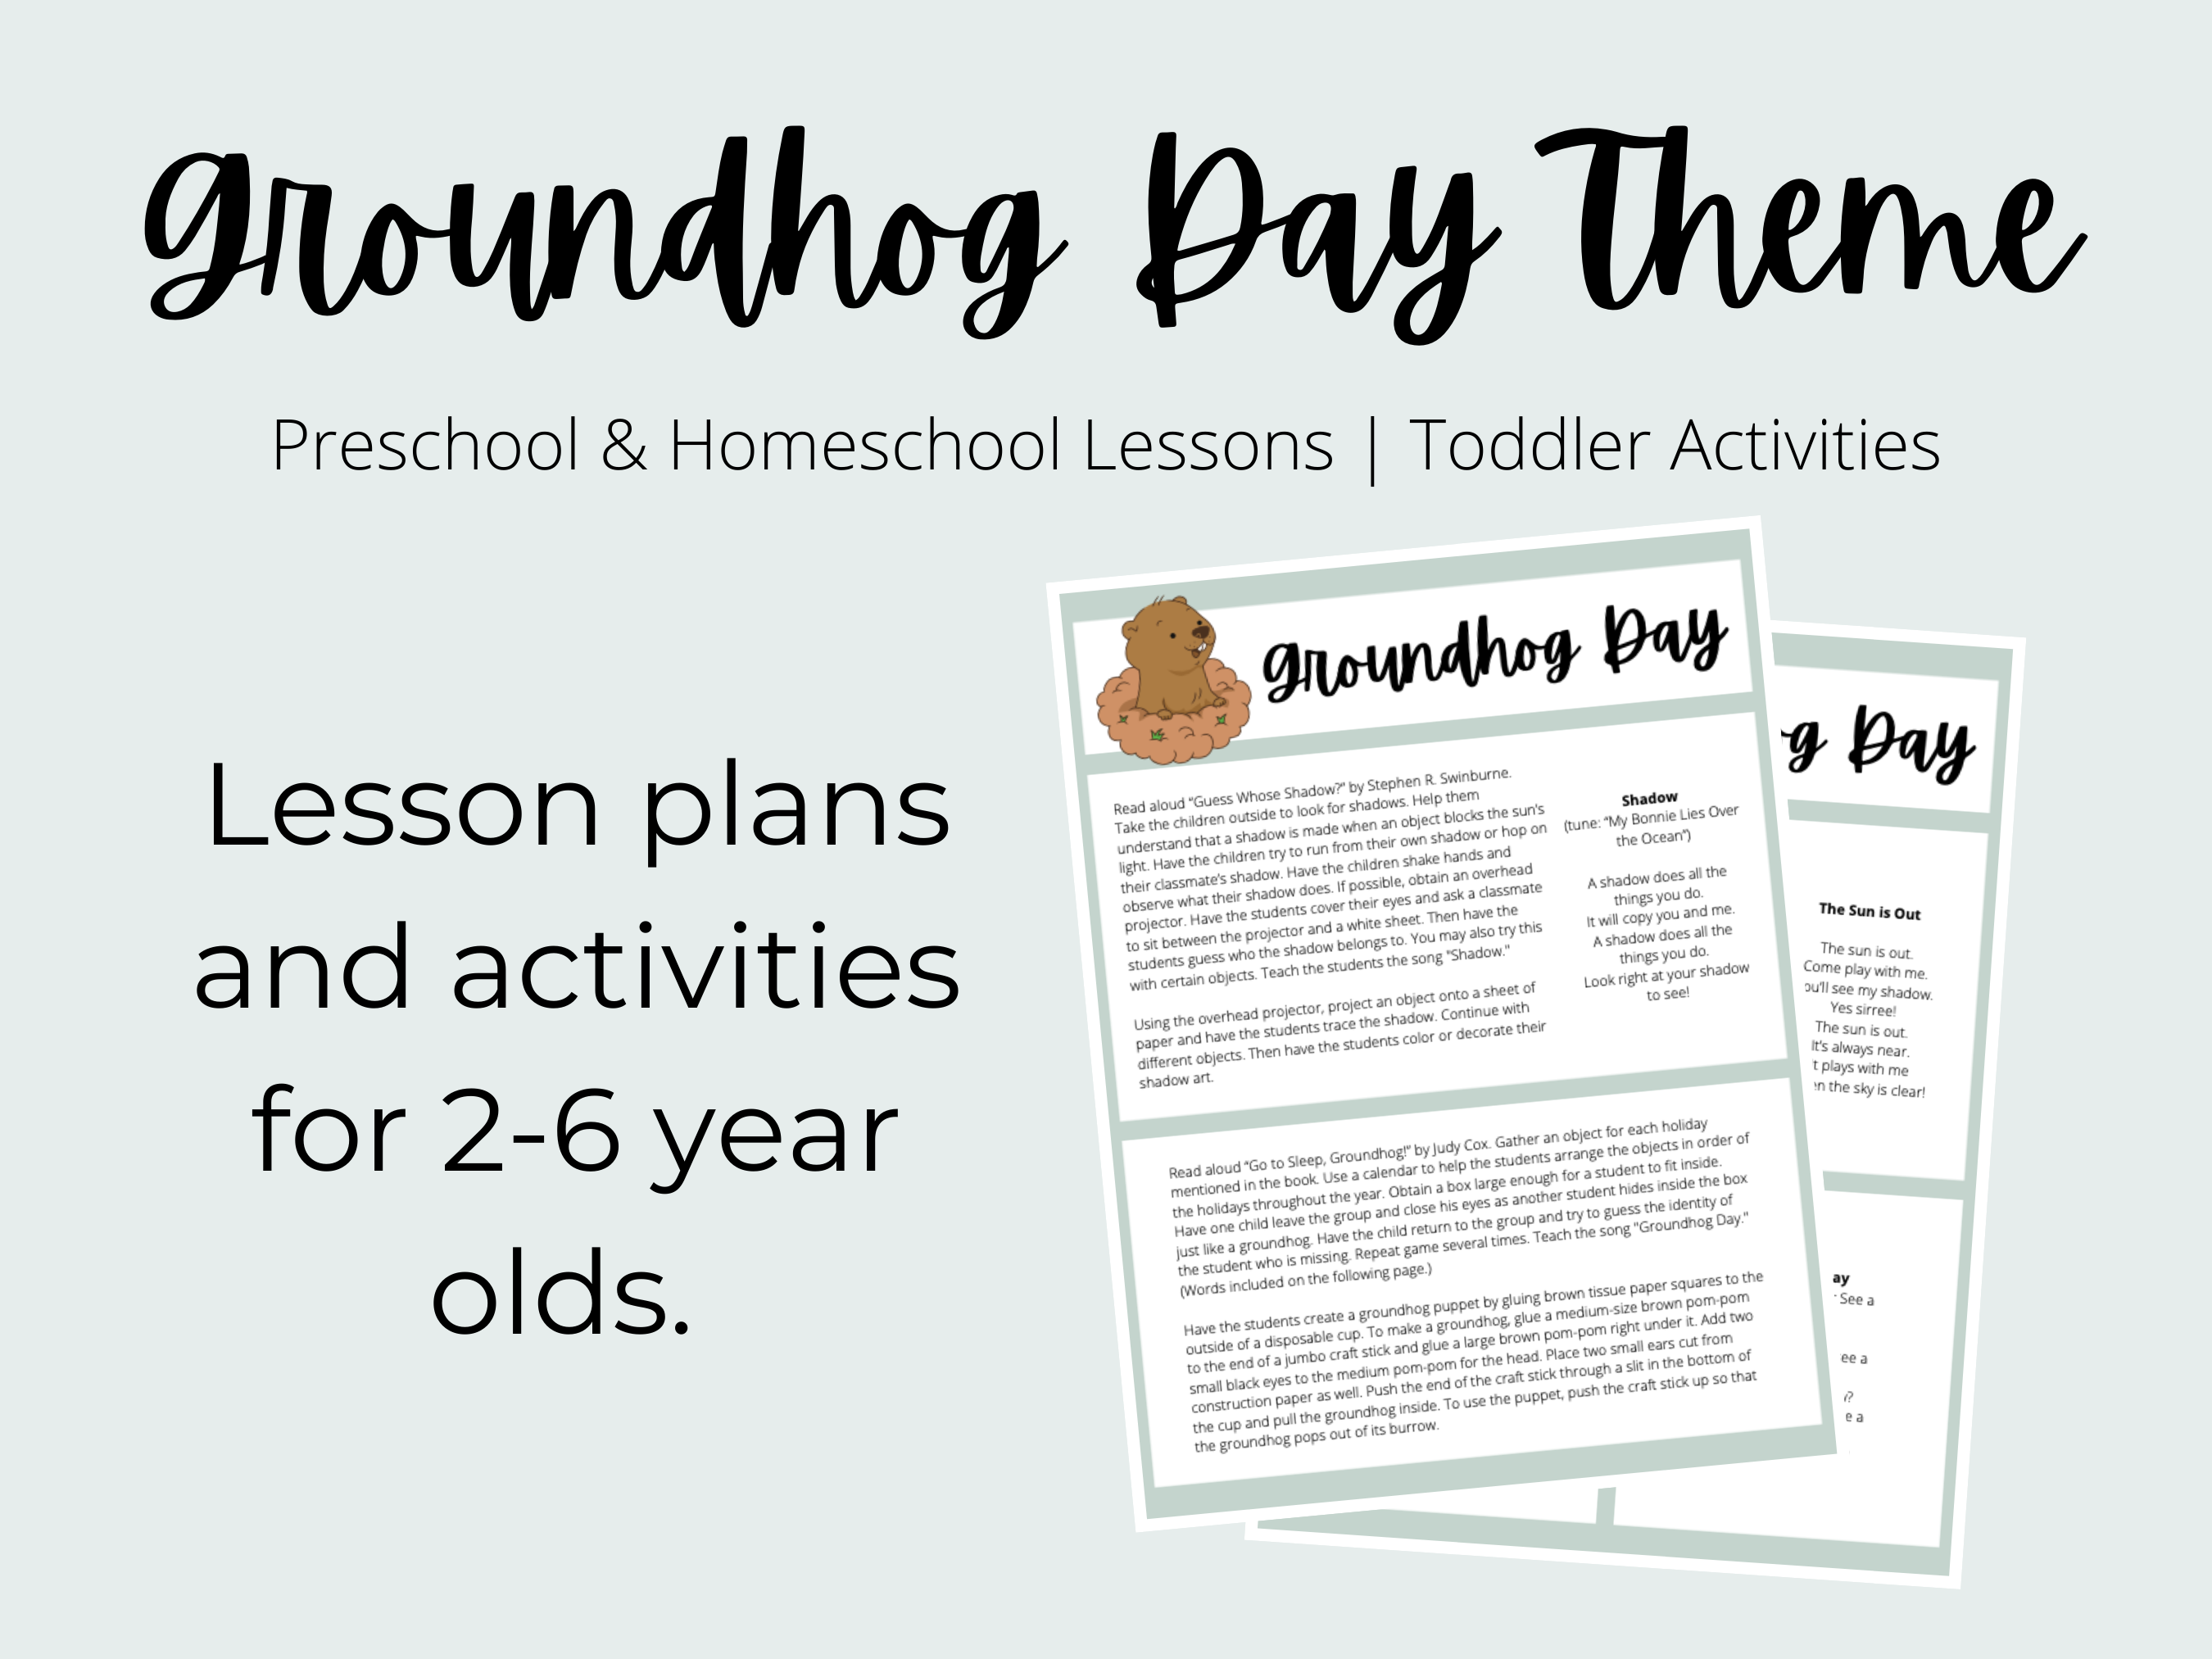 Groundhog Day Theme Preschool Curriculum Bundle | Homeschool Lesson Plan Bundle | For Preschool Teachers, Homeschooling & Stay-At-Home Moms